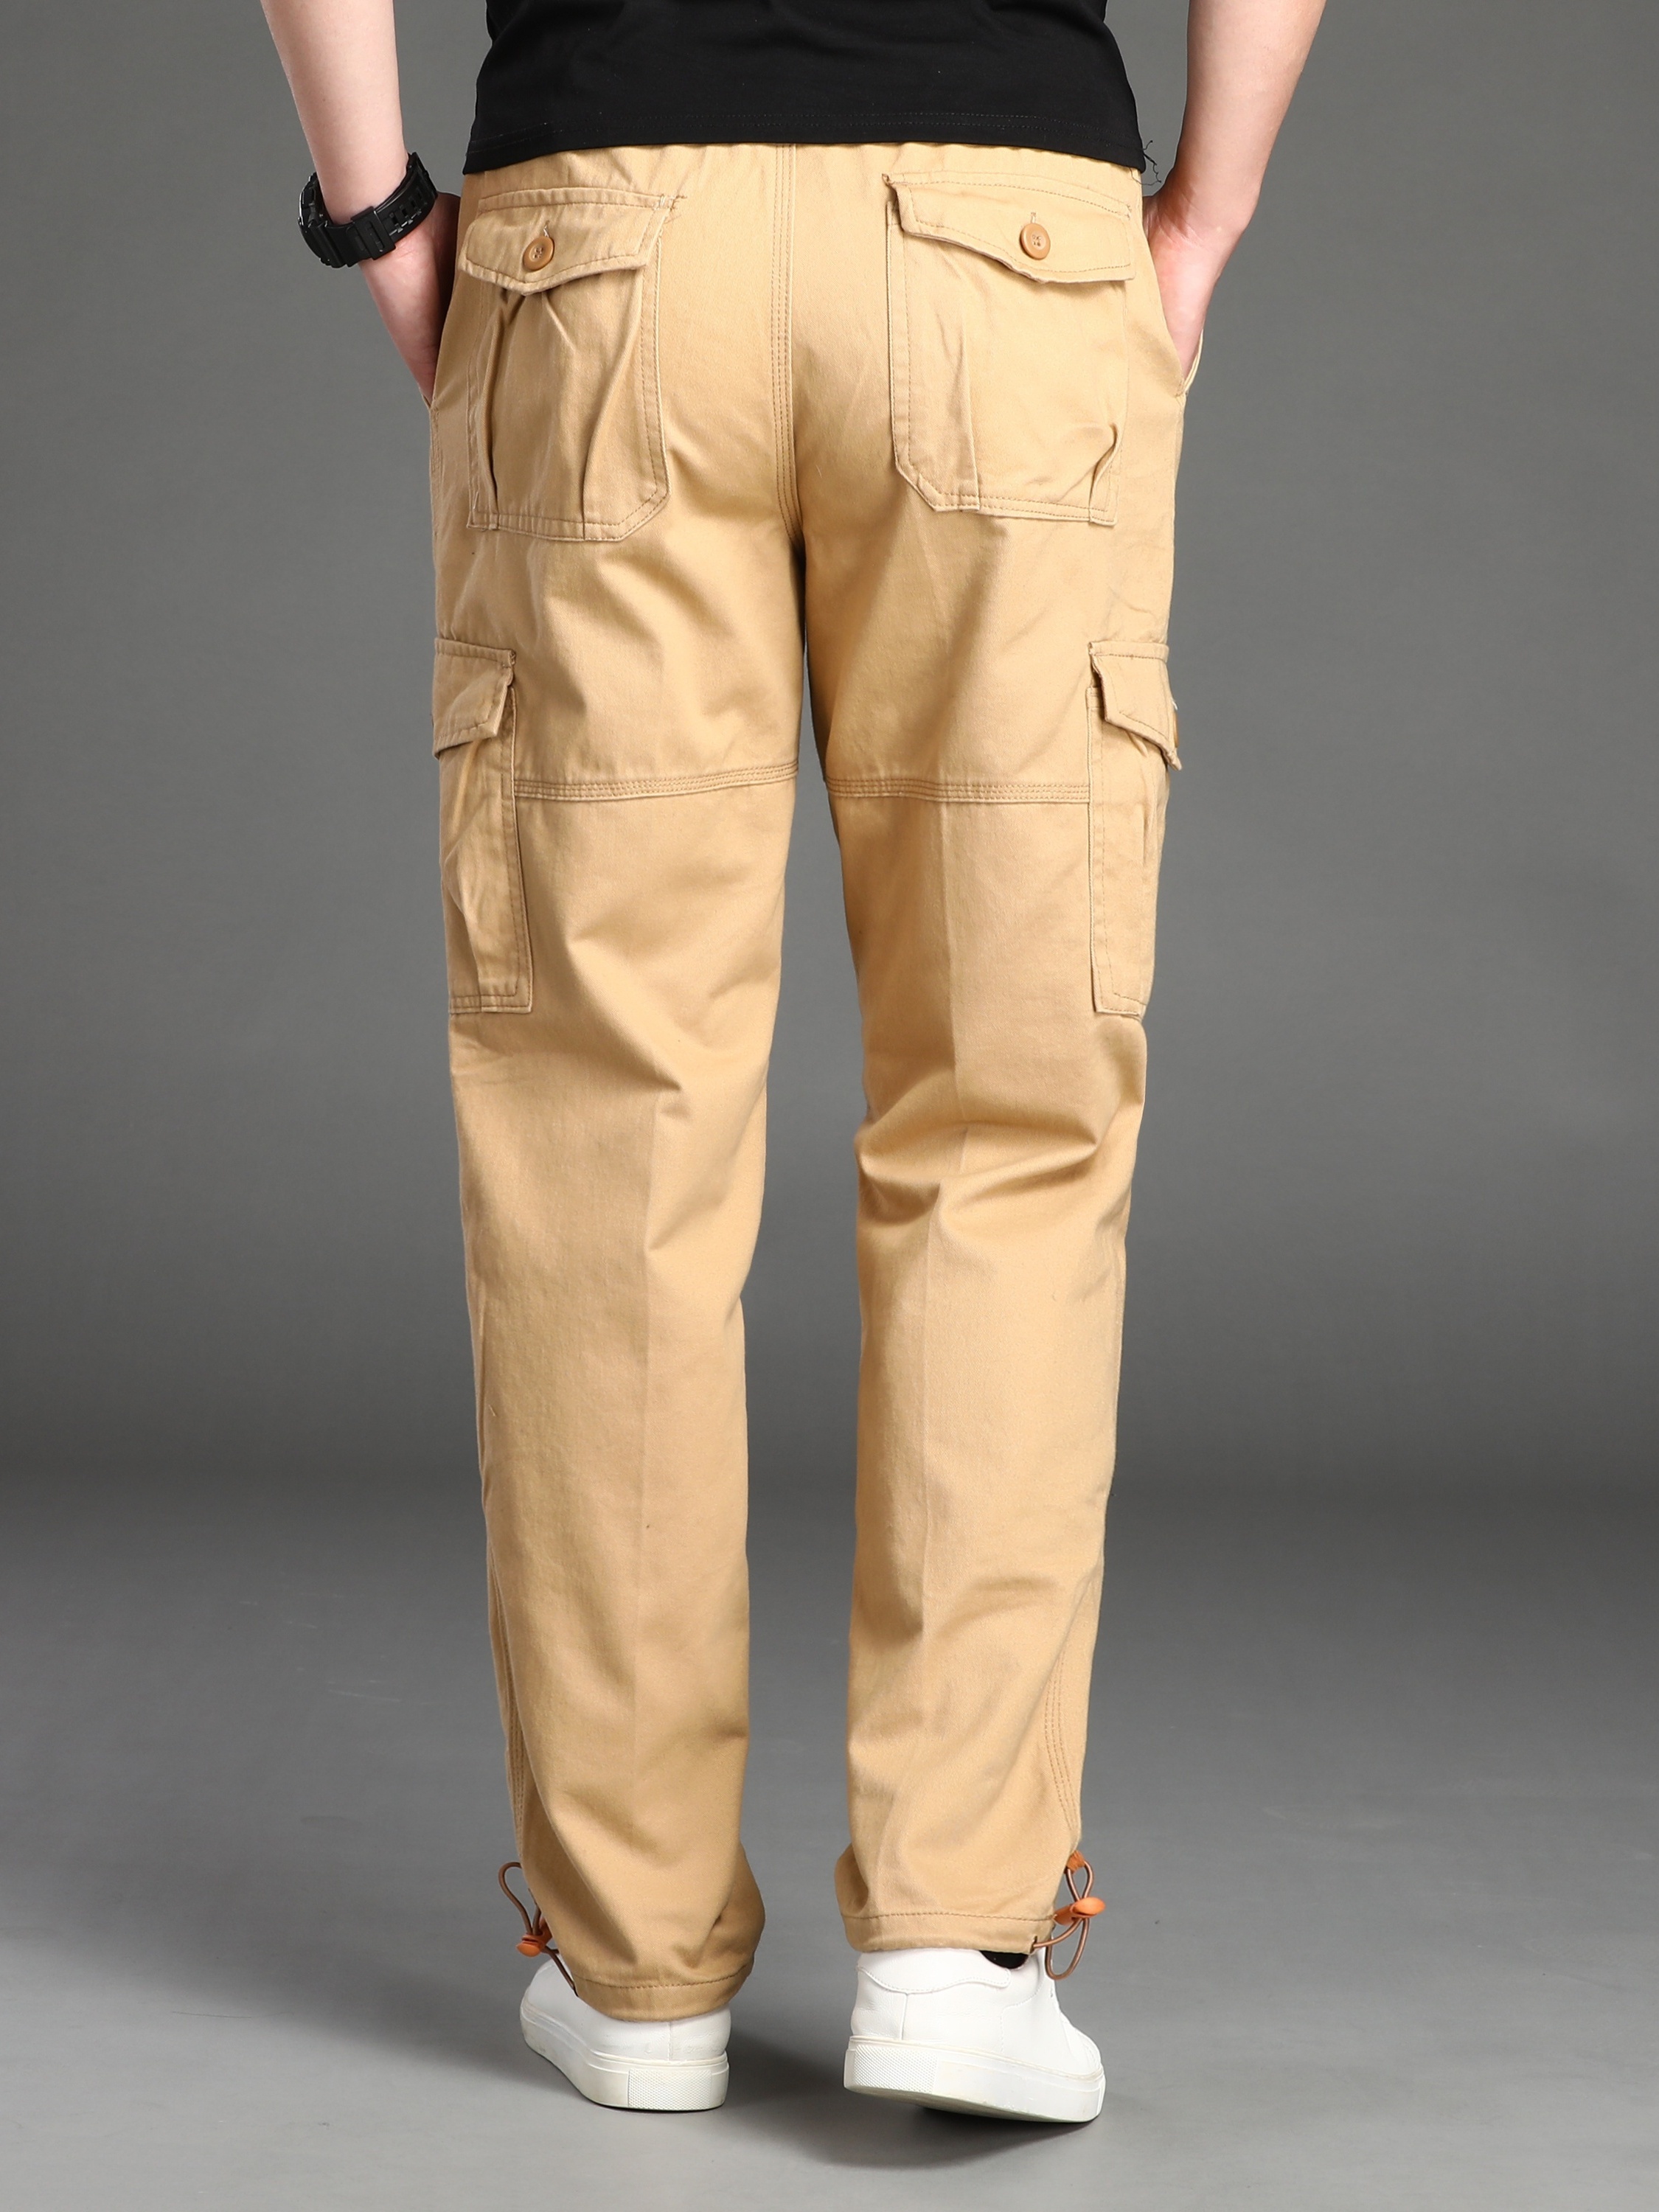 Men's Chino Pants - Durable Everyday Pants